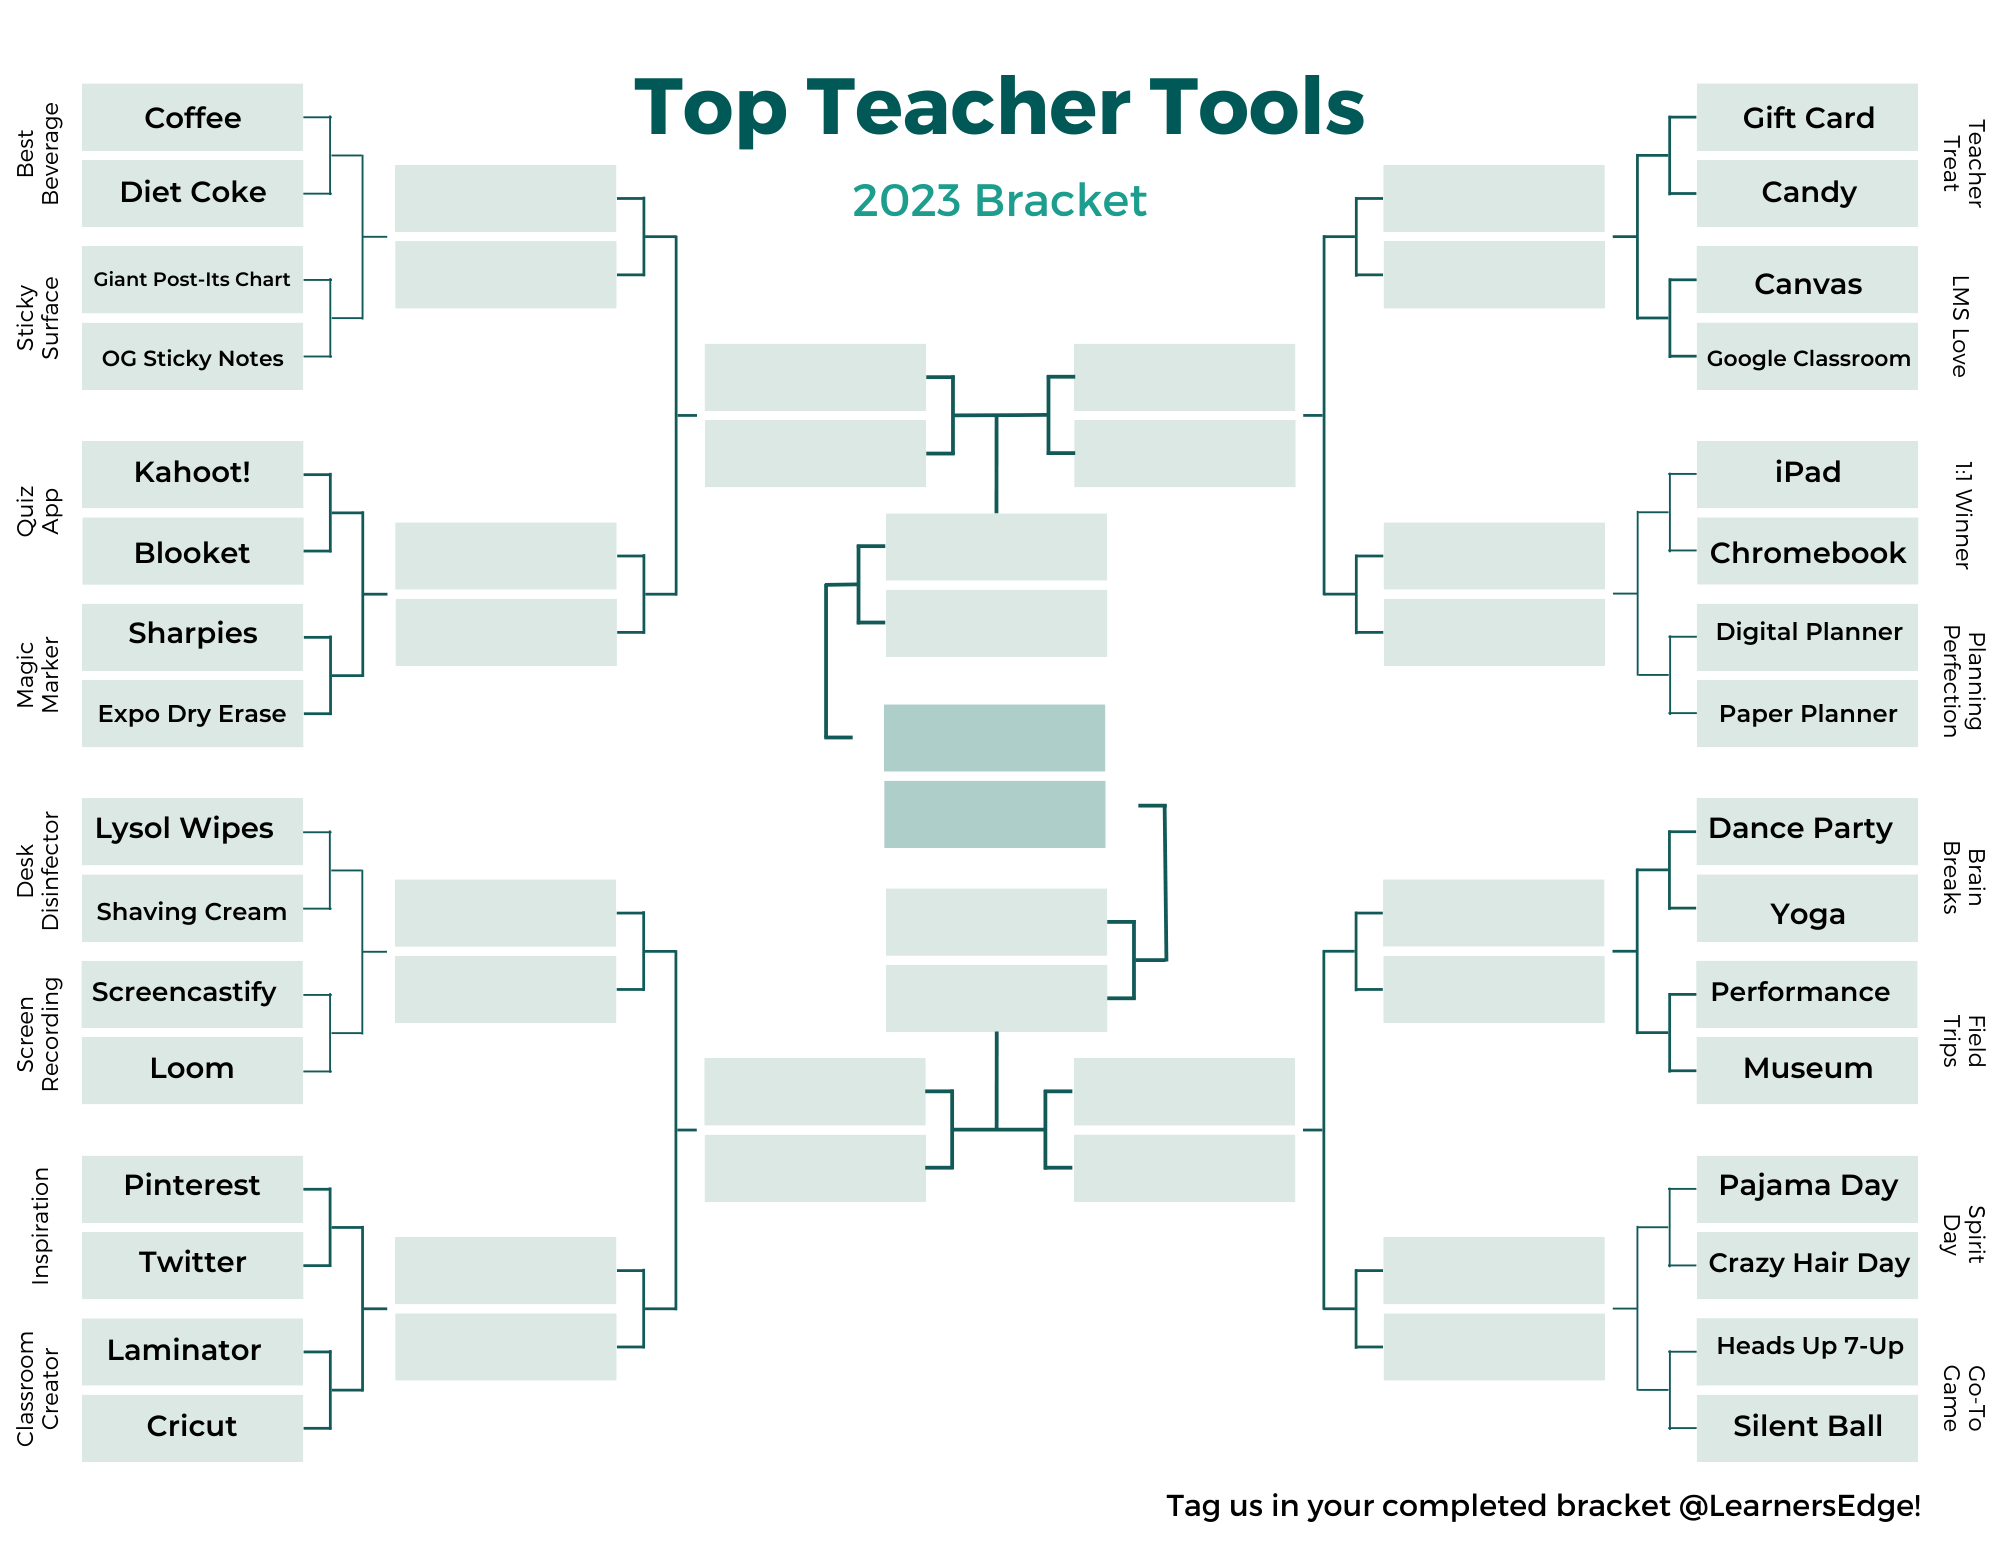 Top Teacher Tools Bracket 2023 (1)